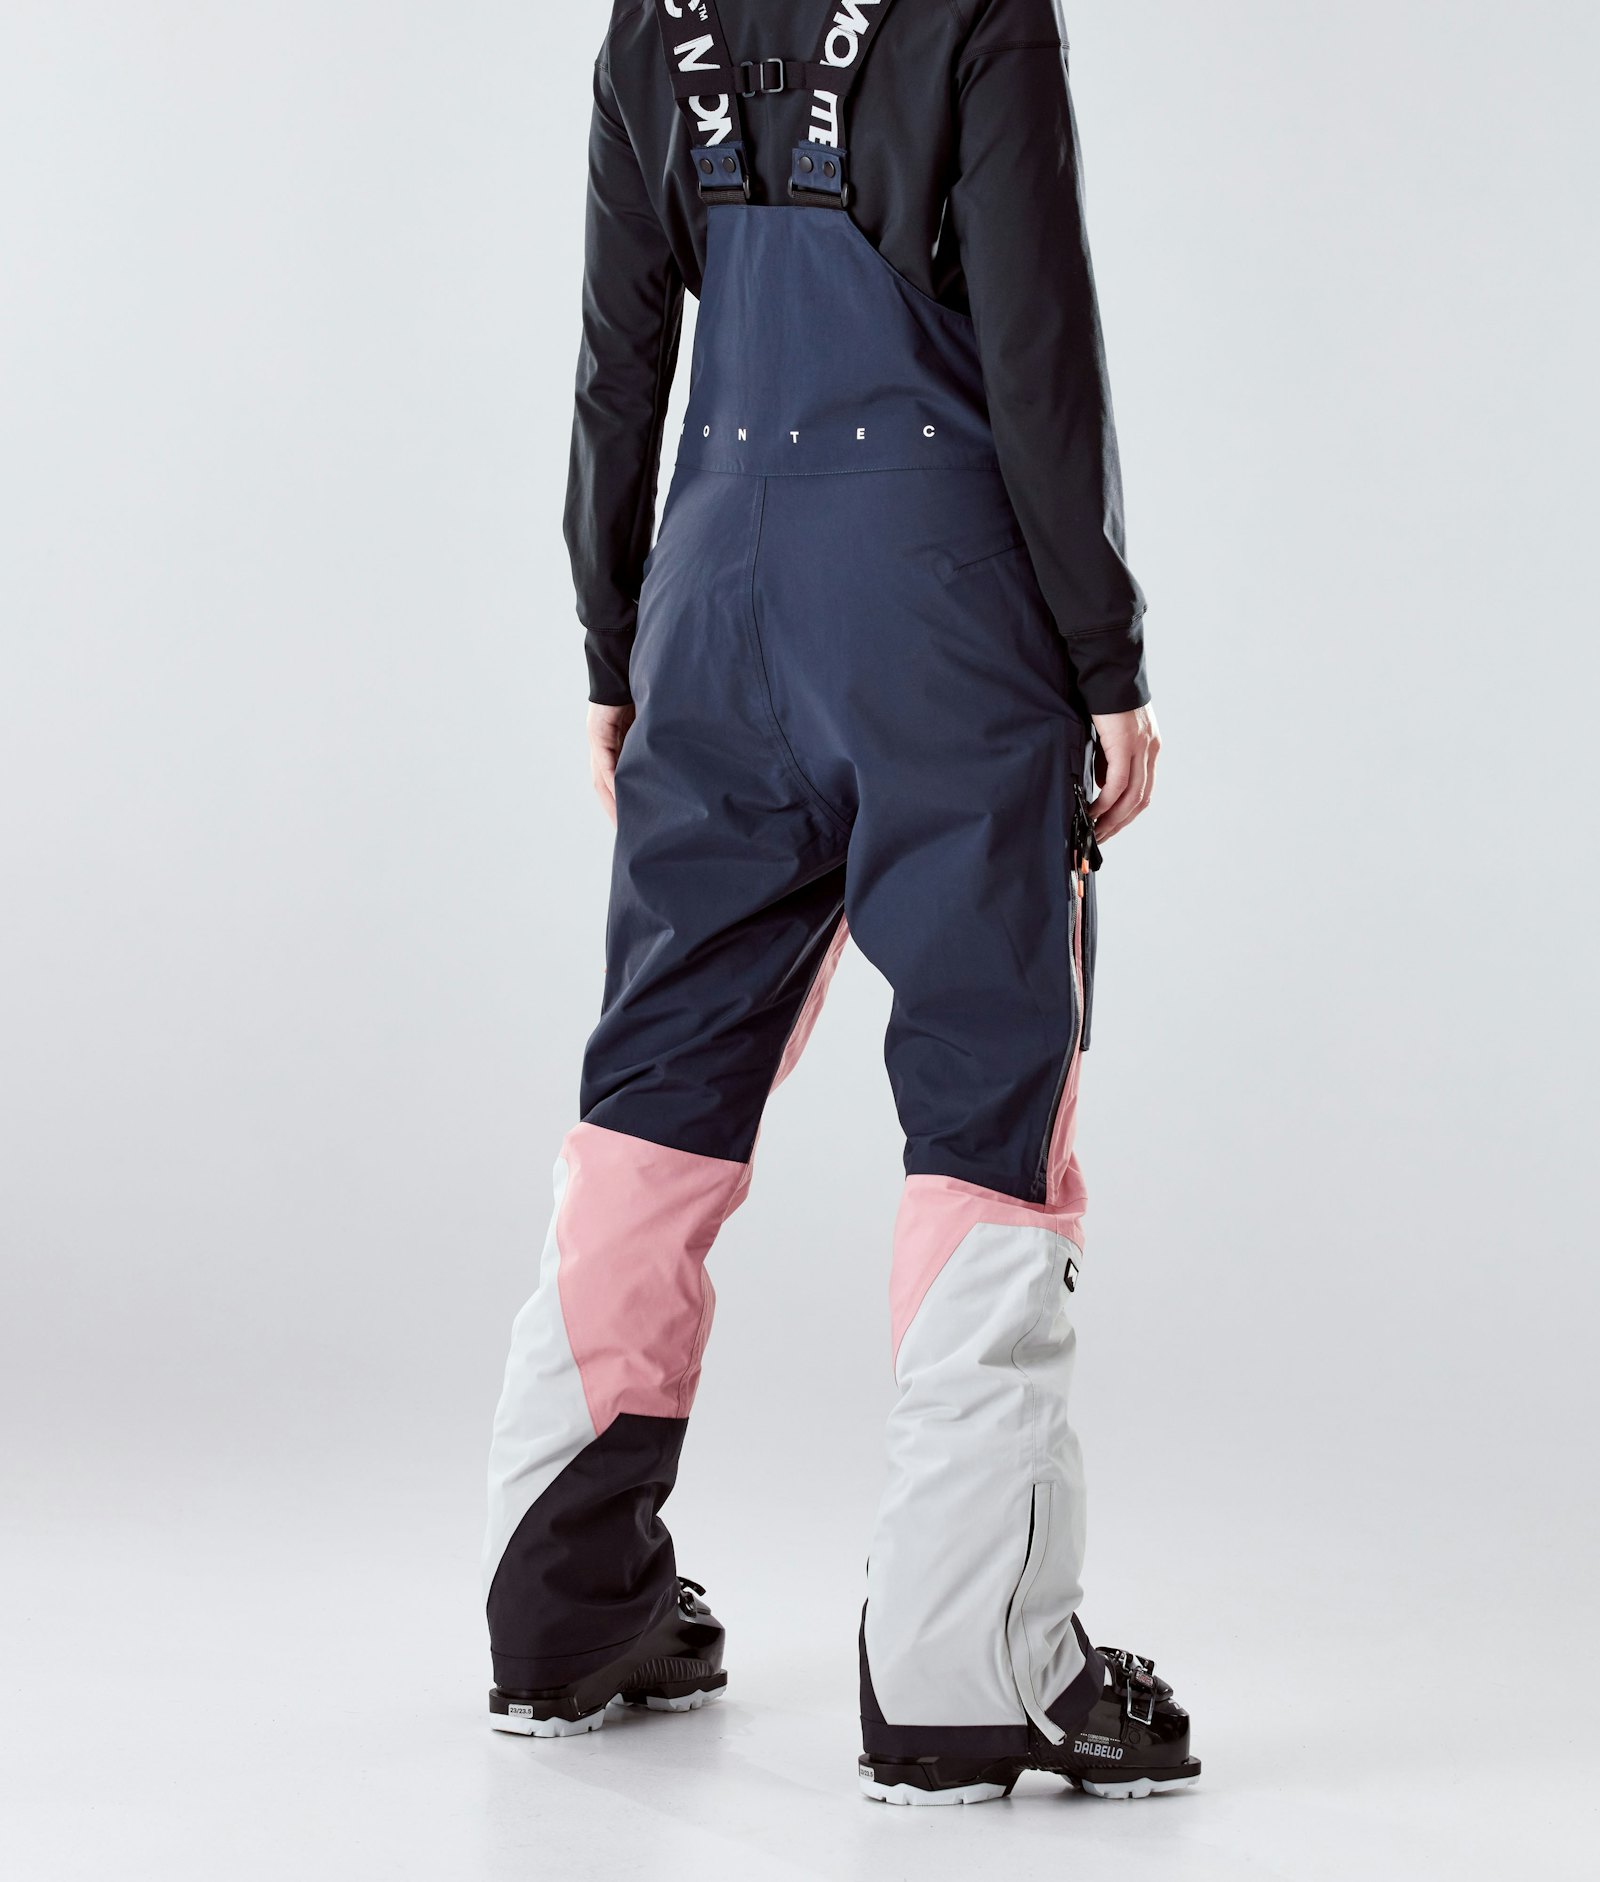 Fawk W 2020 Skihose Damen Marine/Pink/Light Grey